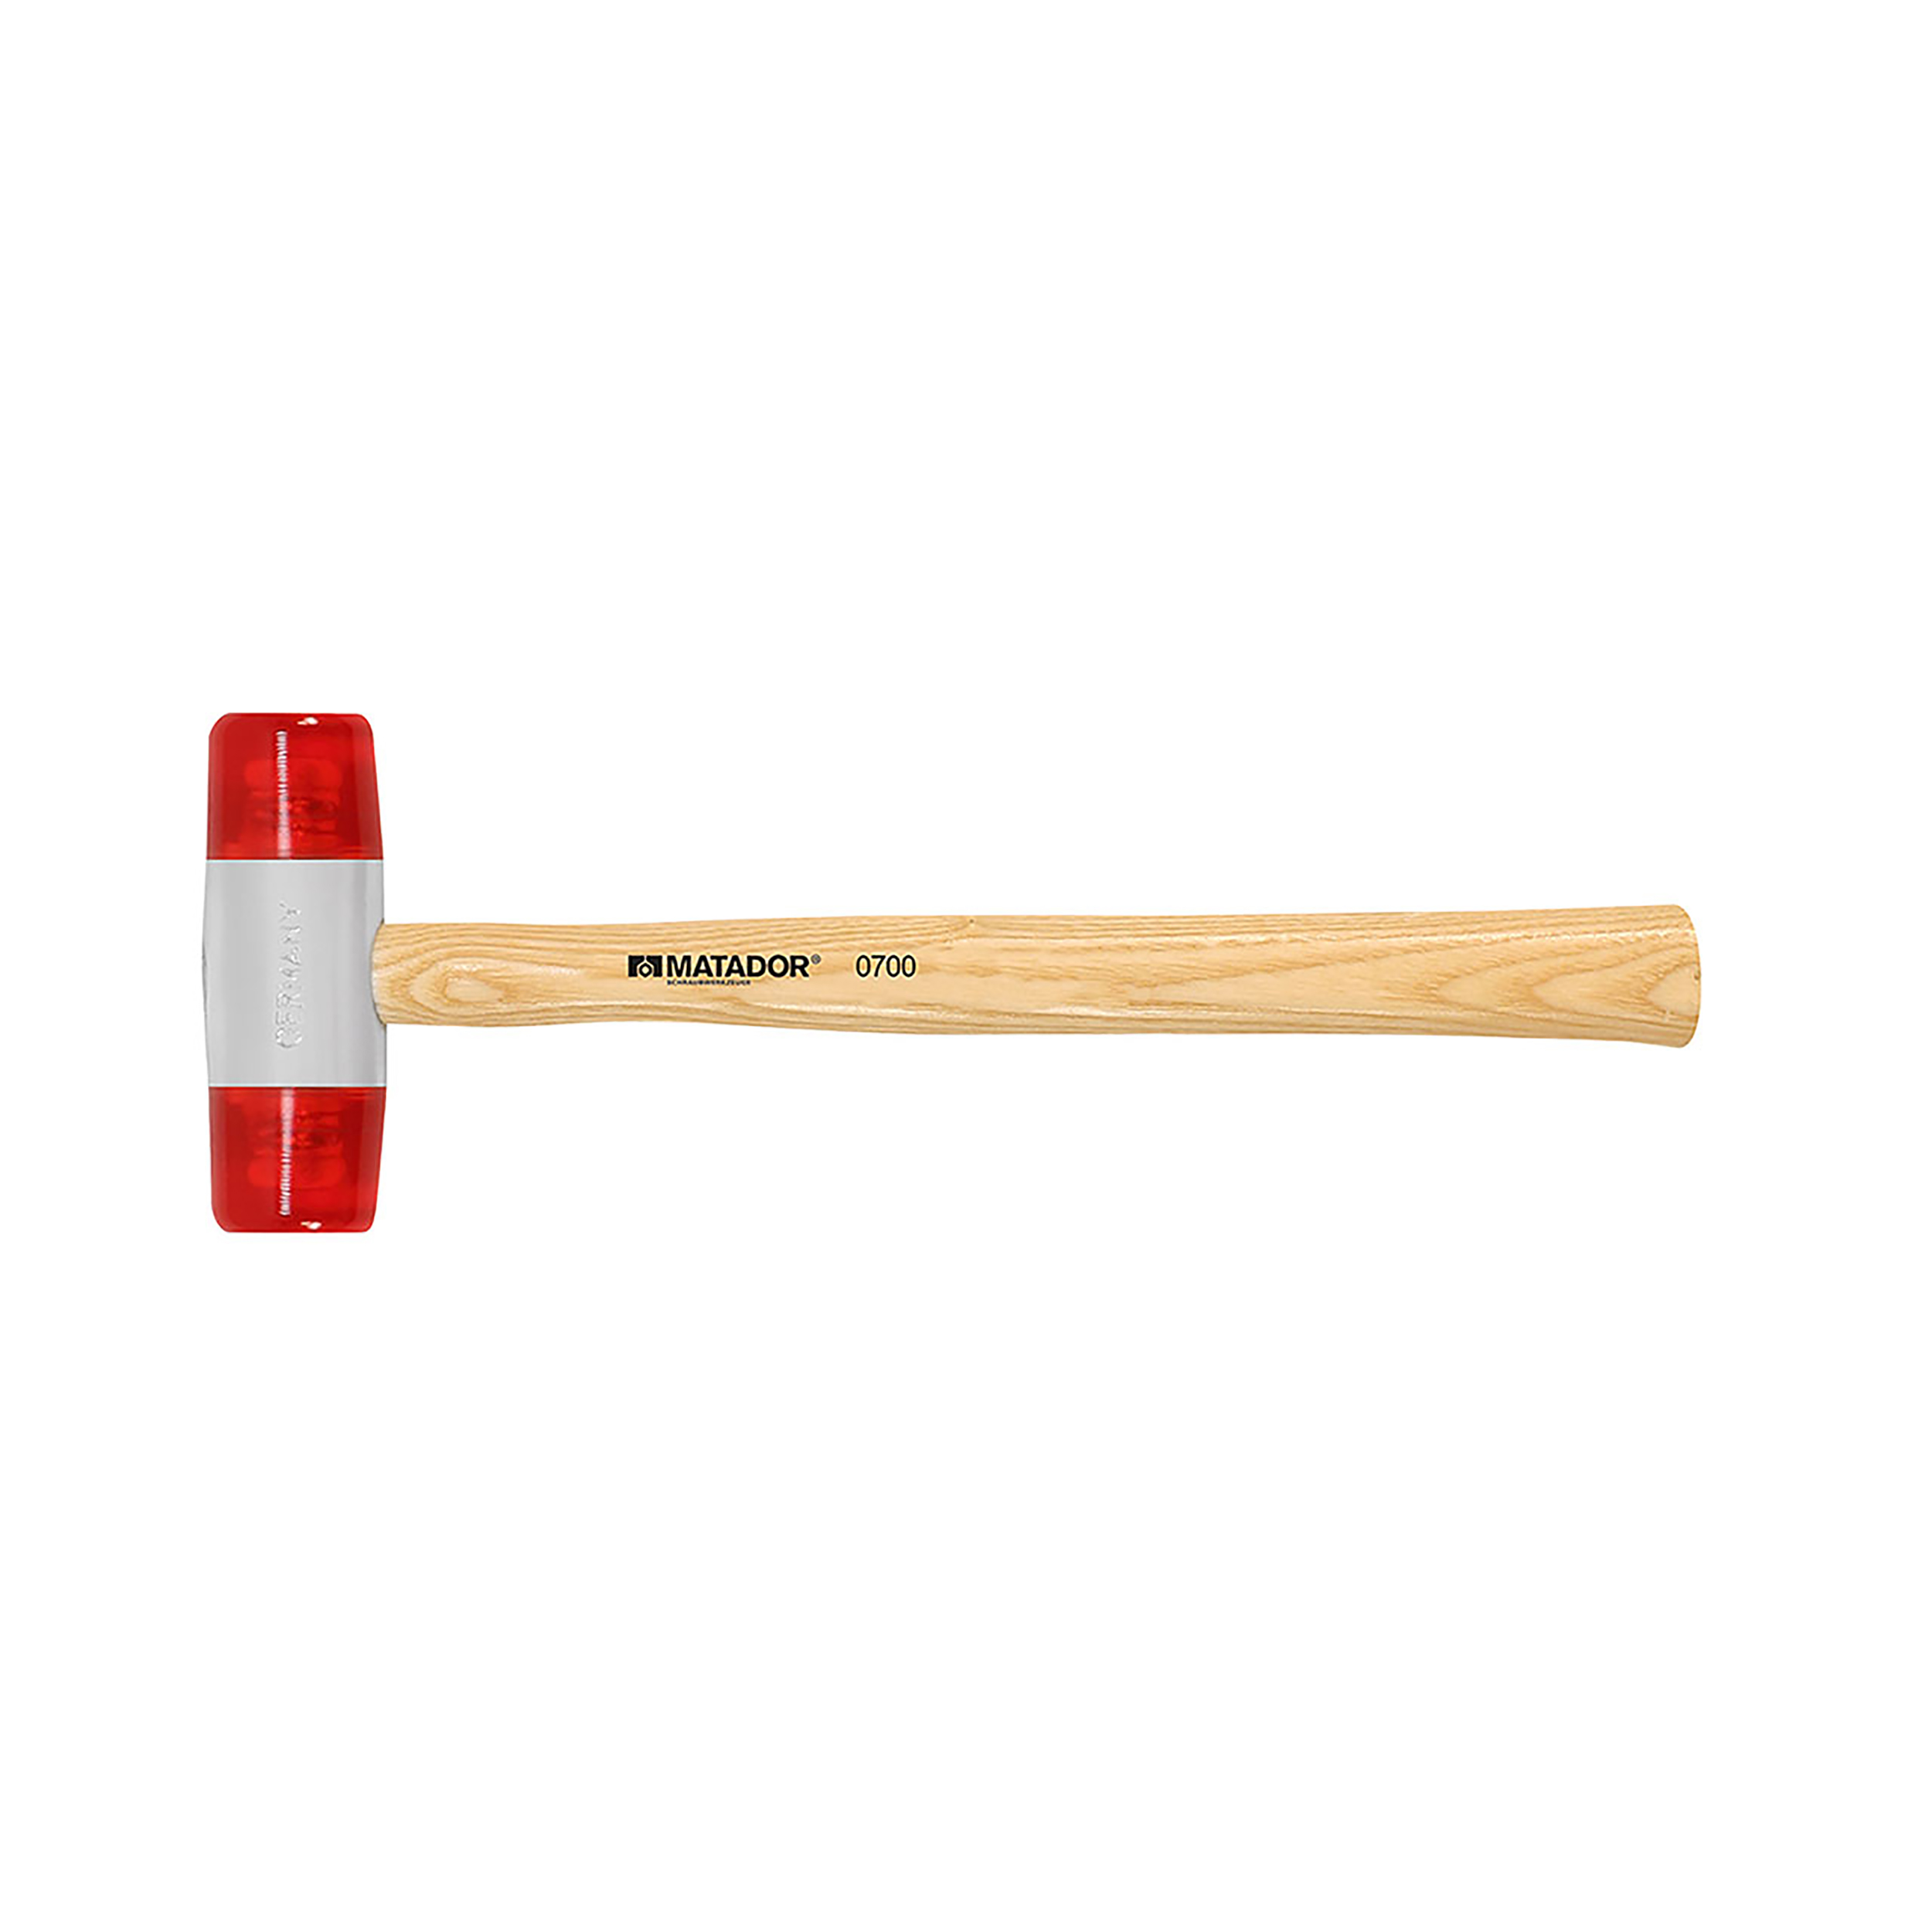 Treib- und Ausbeulhammer, 150 g, 22 mm, MATADOR Art.-Nr.: 07000001